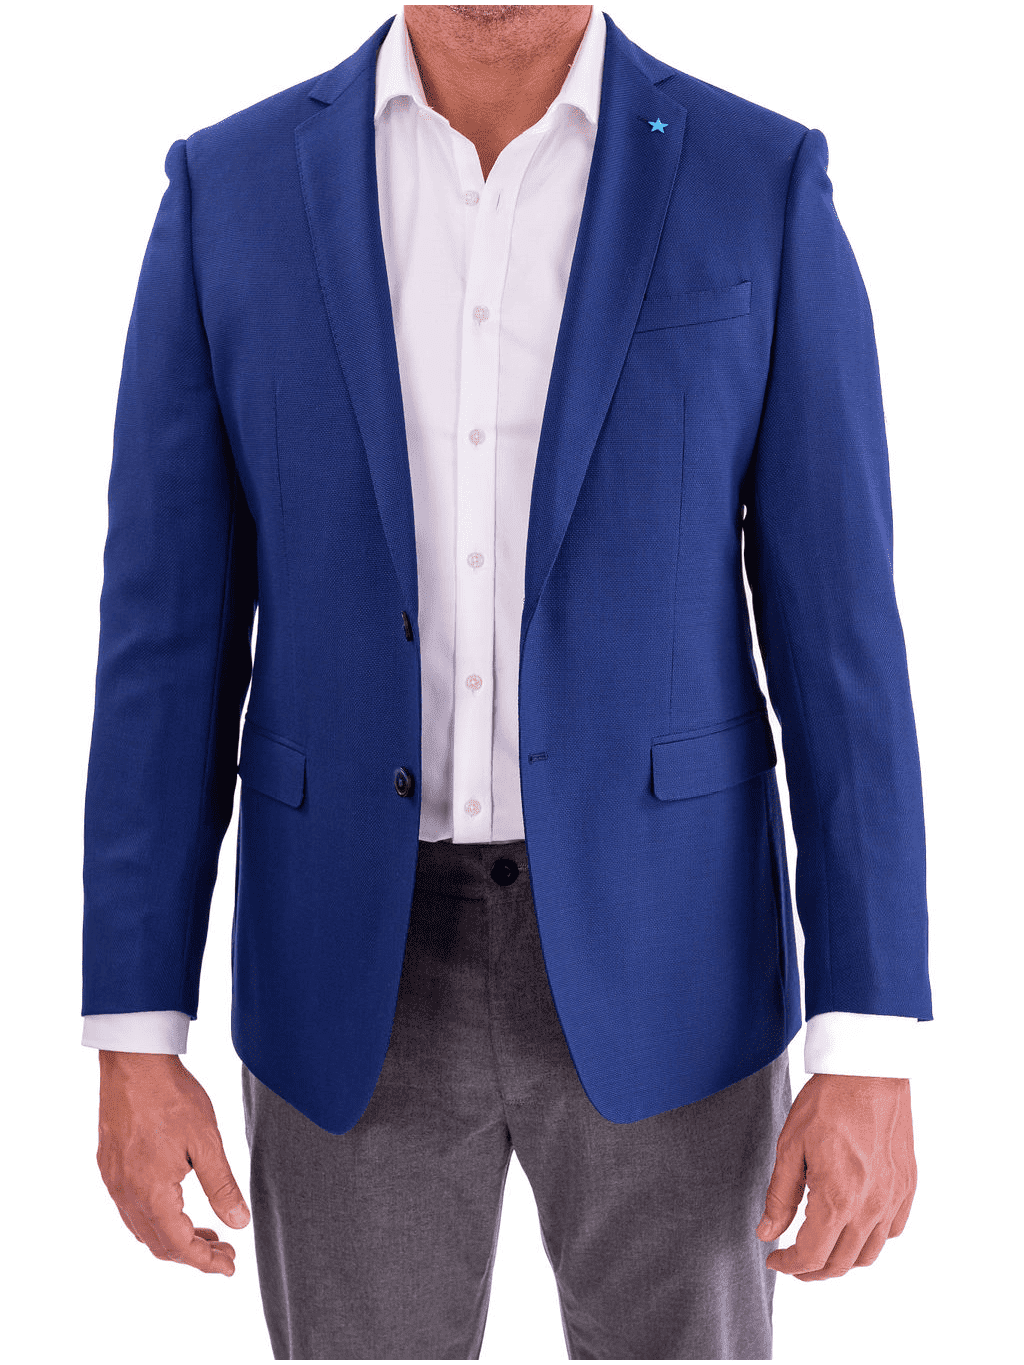 Blue Mens Blazer - Buy Mens Blazers Online in Canada, Blue Blazer